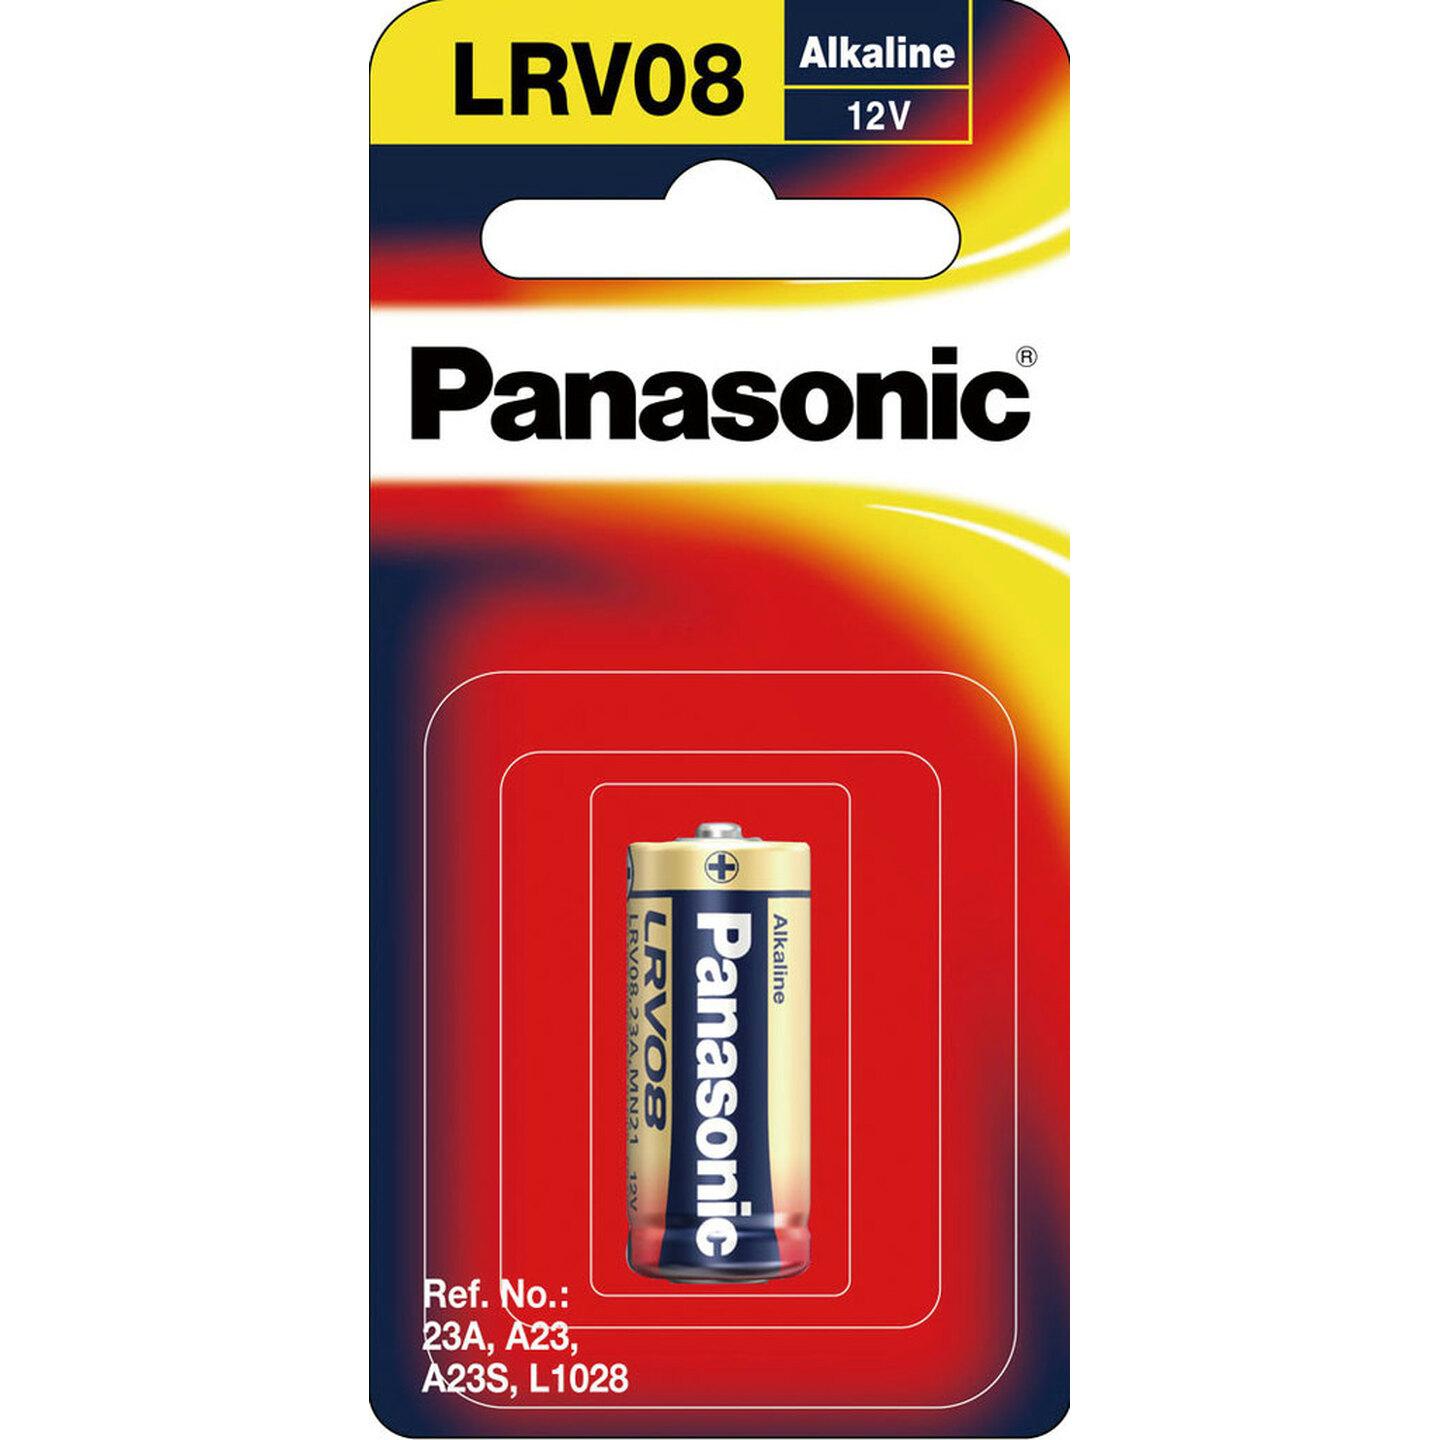 Panasonic A23 12V Alkaline Car Alarm Battery